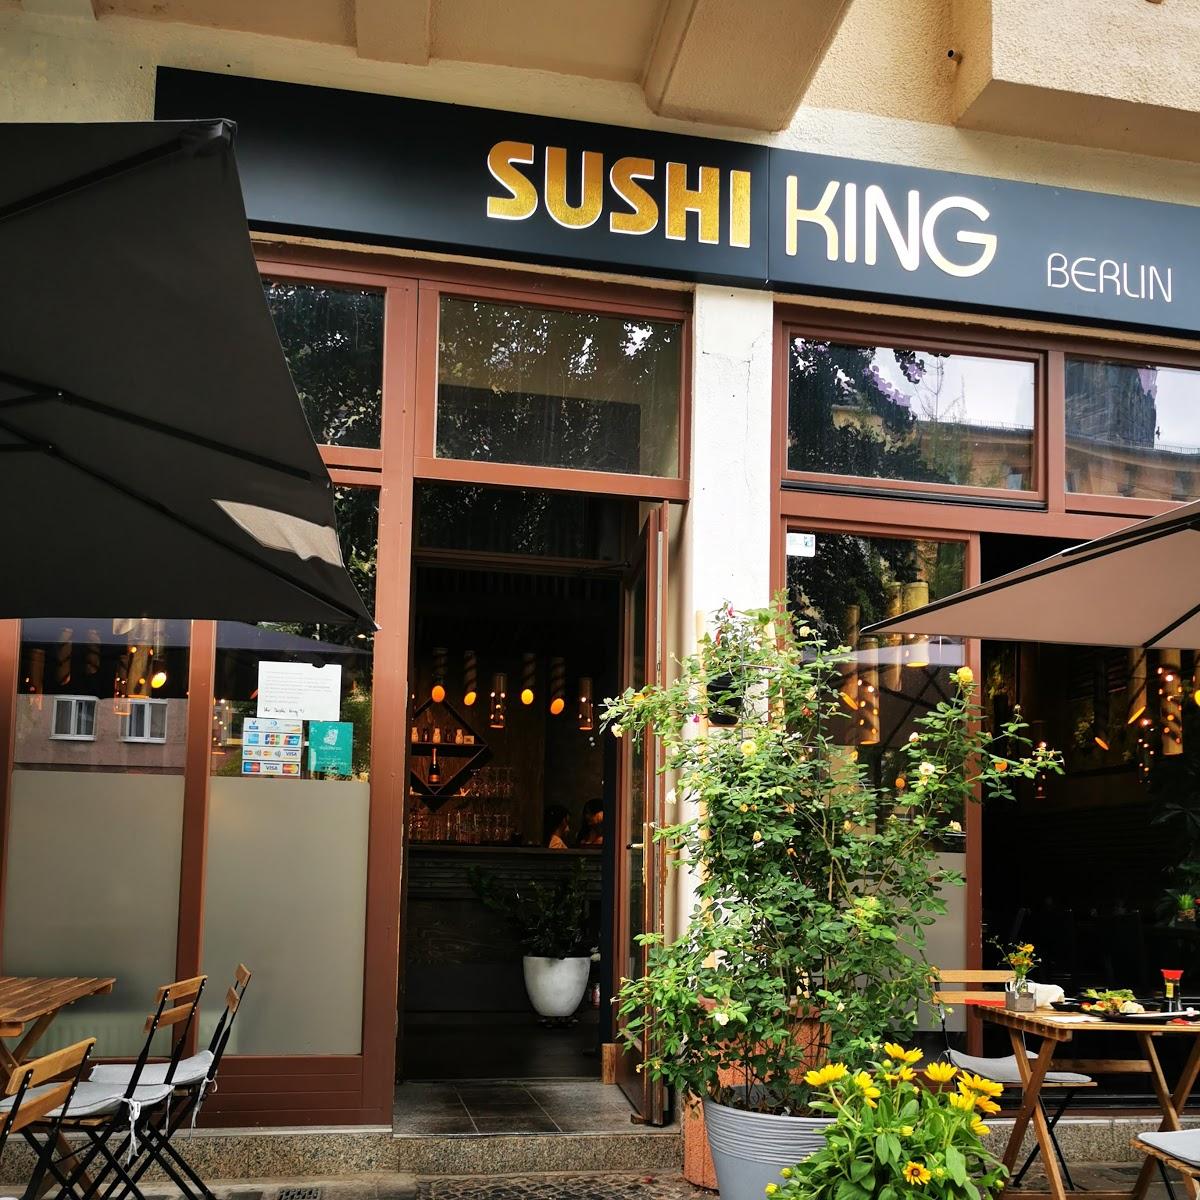 Restaurant "Sushi King Berlin" in Berlin